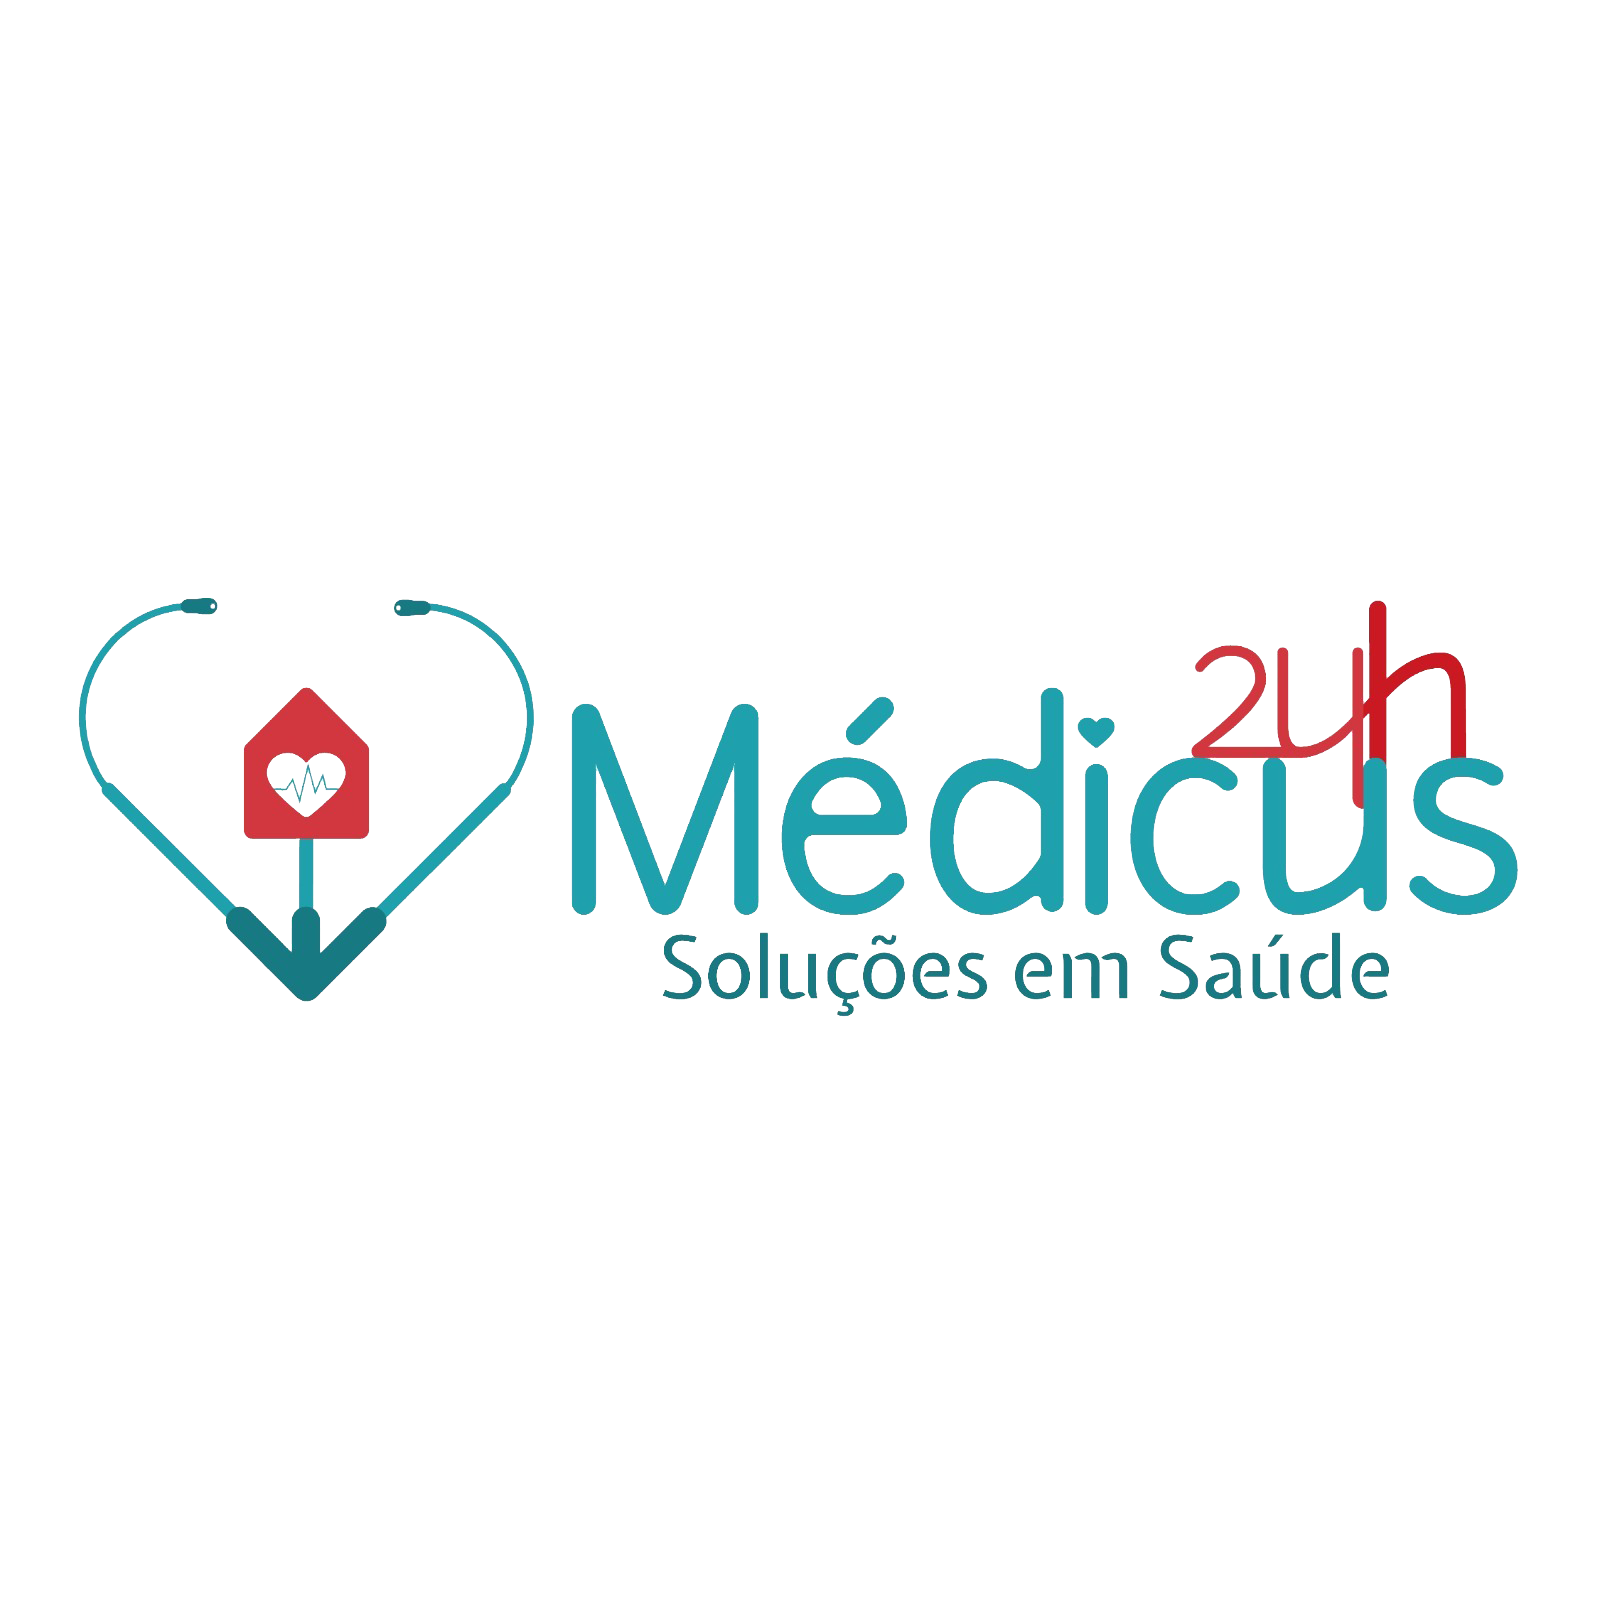 Medicus 24hs (1)